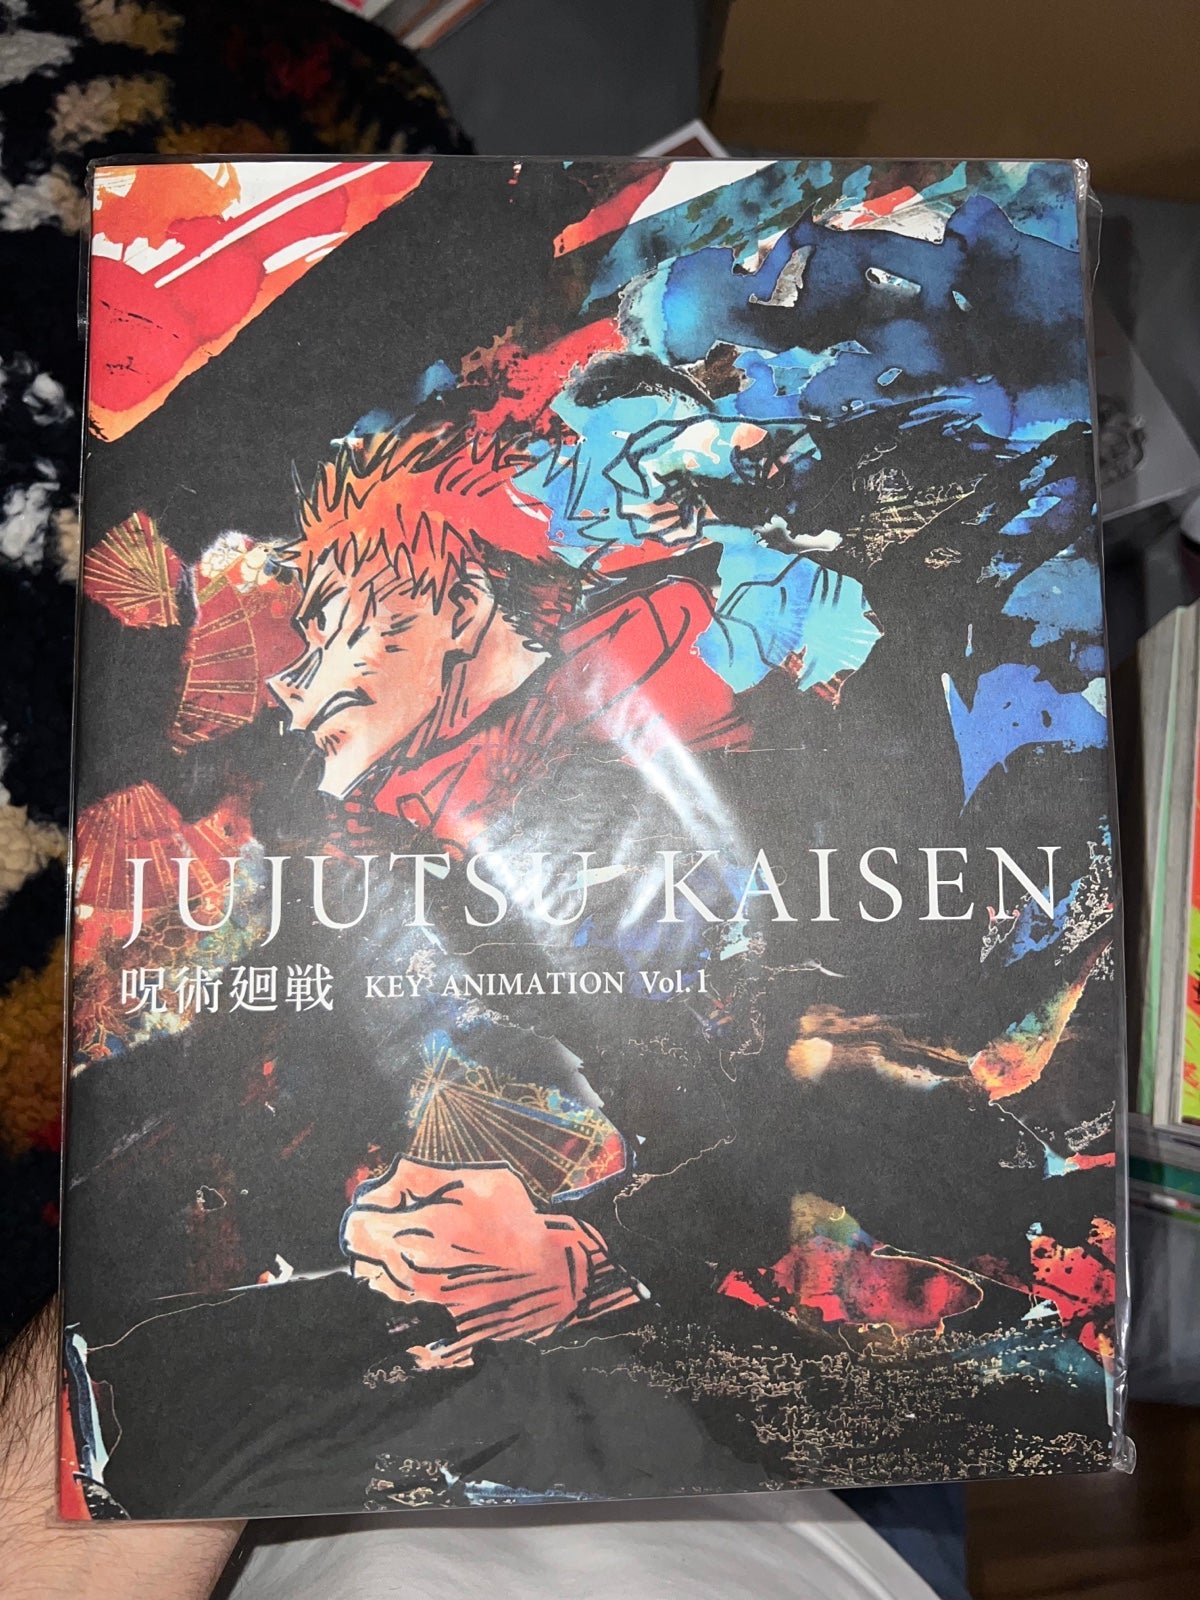 jujutsu kaisen art book Fdczpimxc